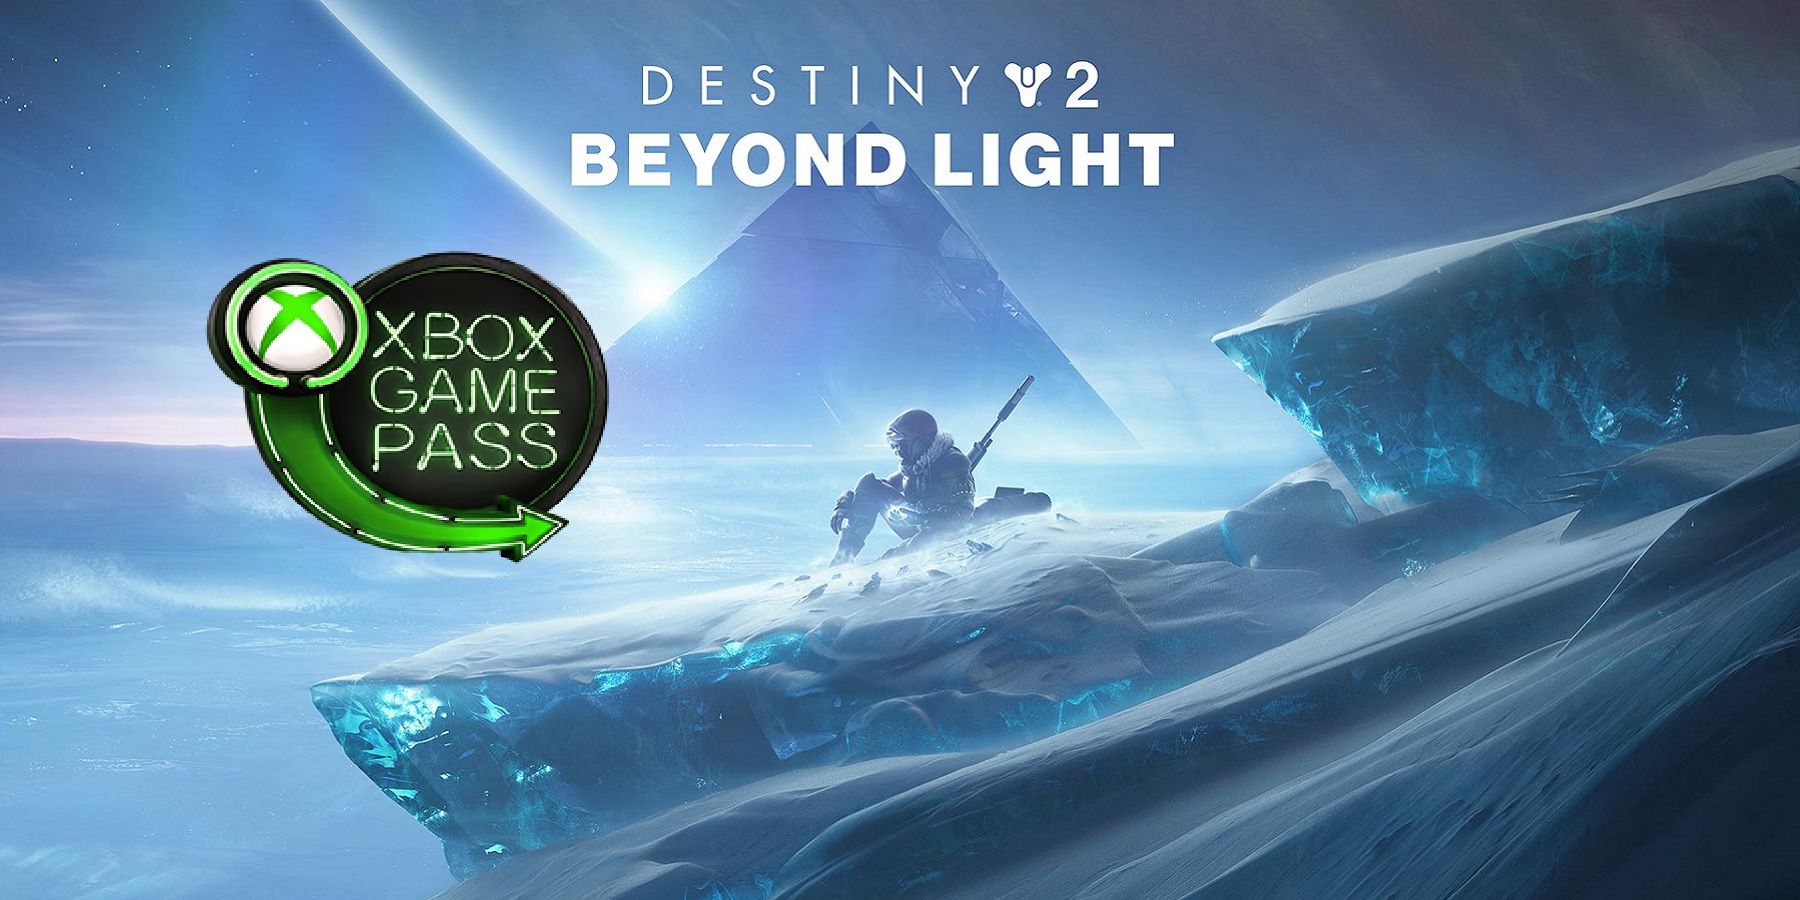 destiny 2 beyond light with xbox game pass logo